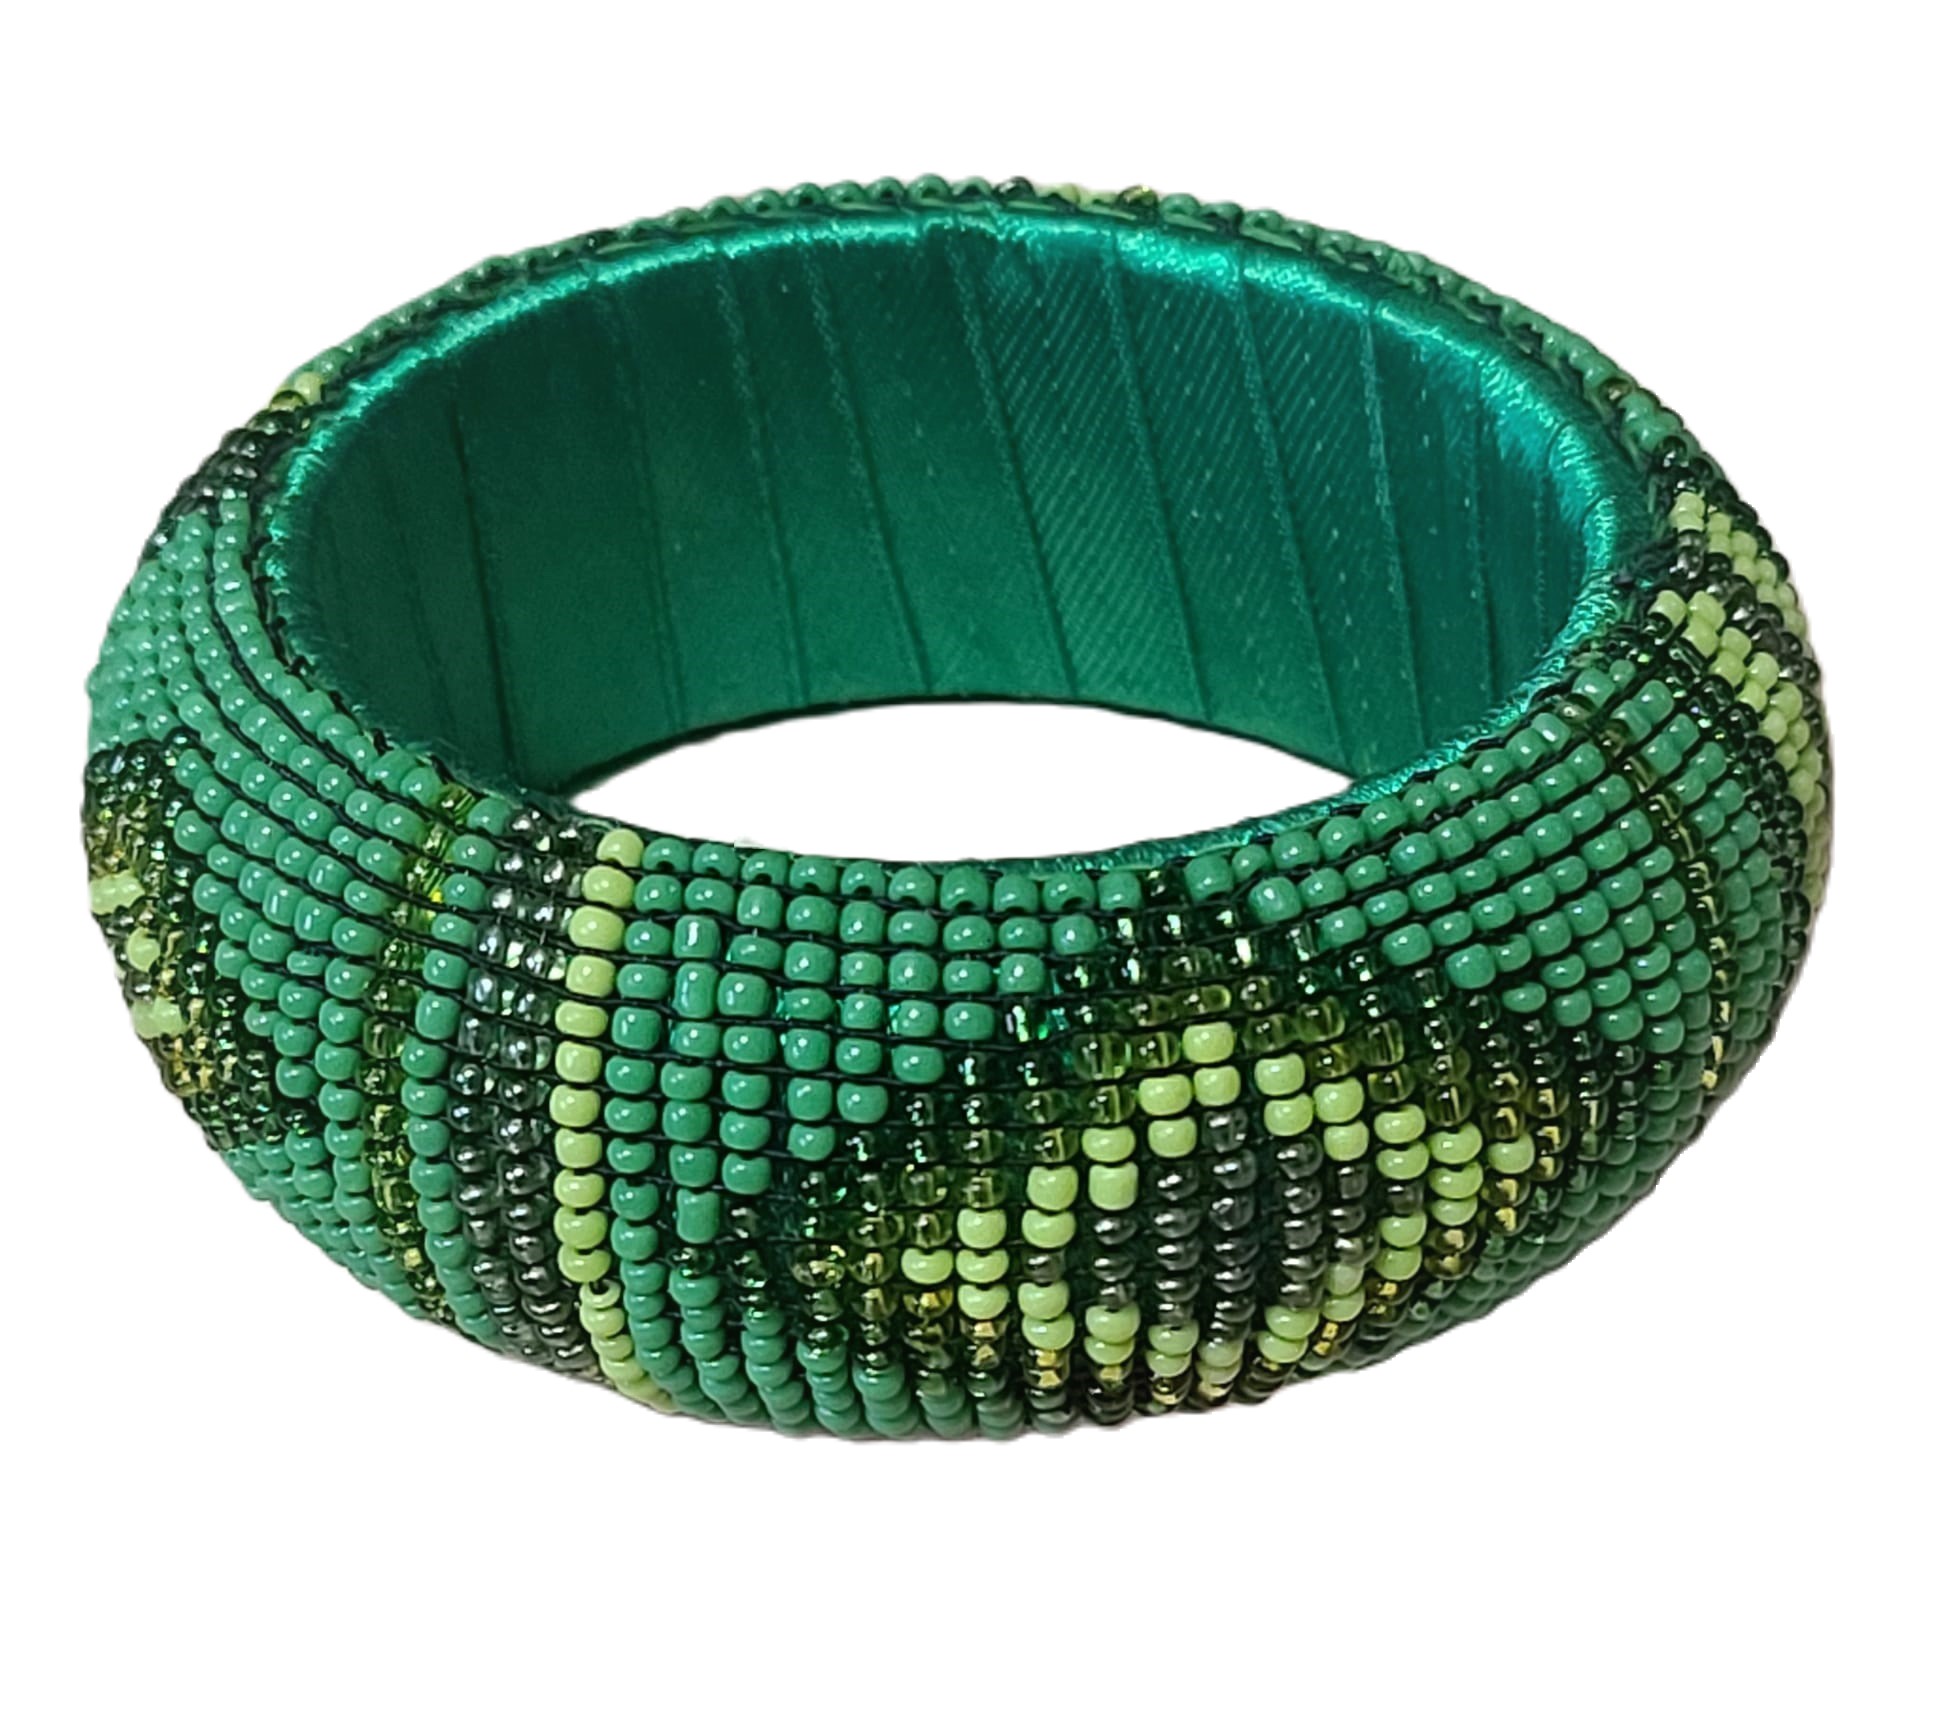 Green seed bead bangle bracelet